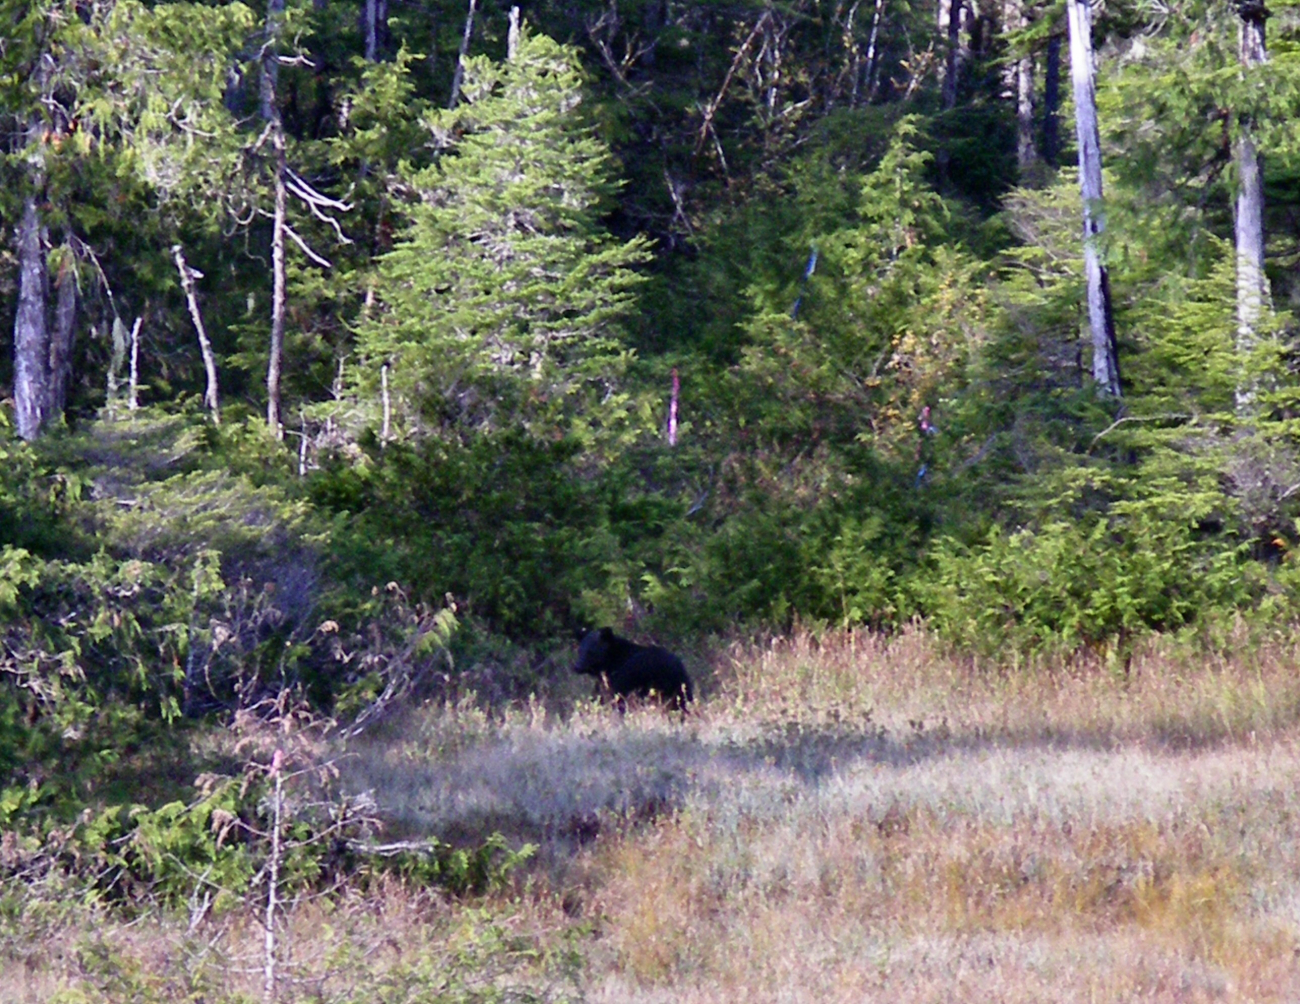 Black bear in the bushes